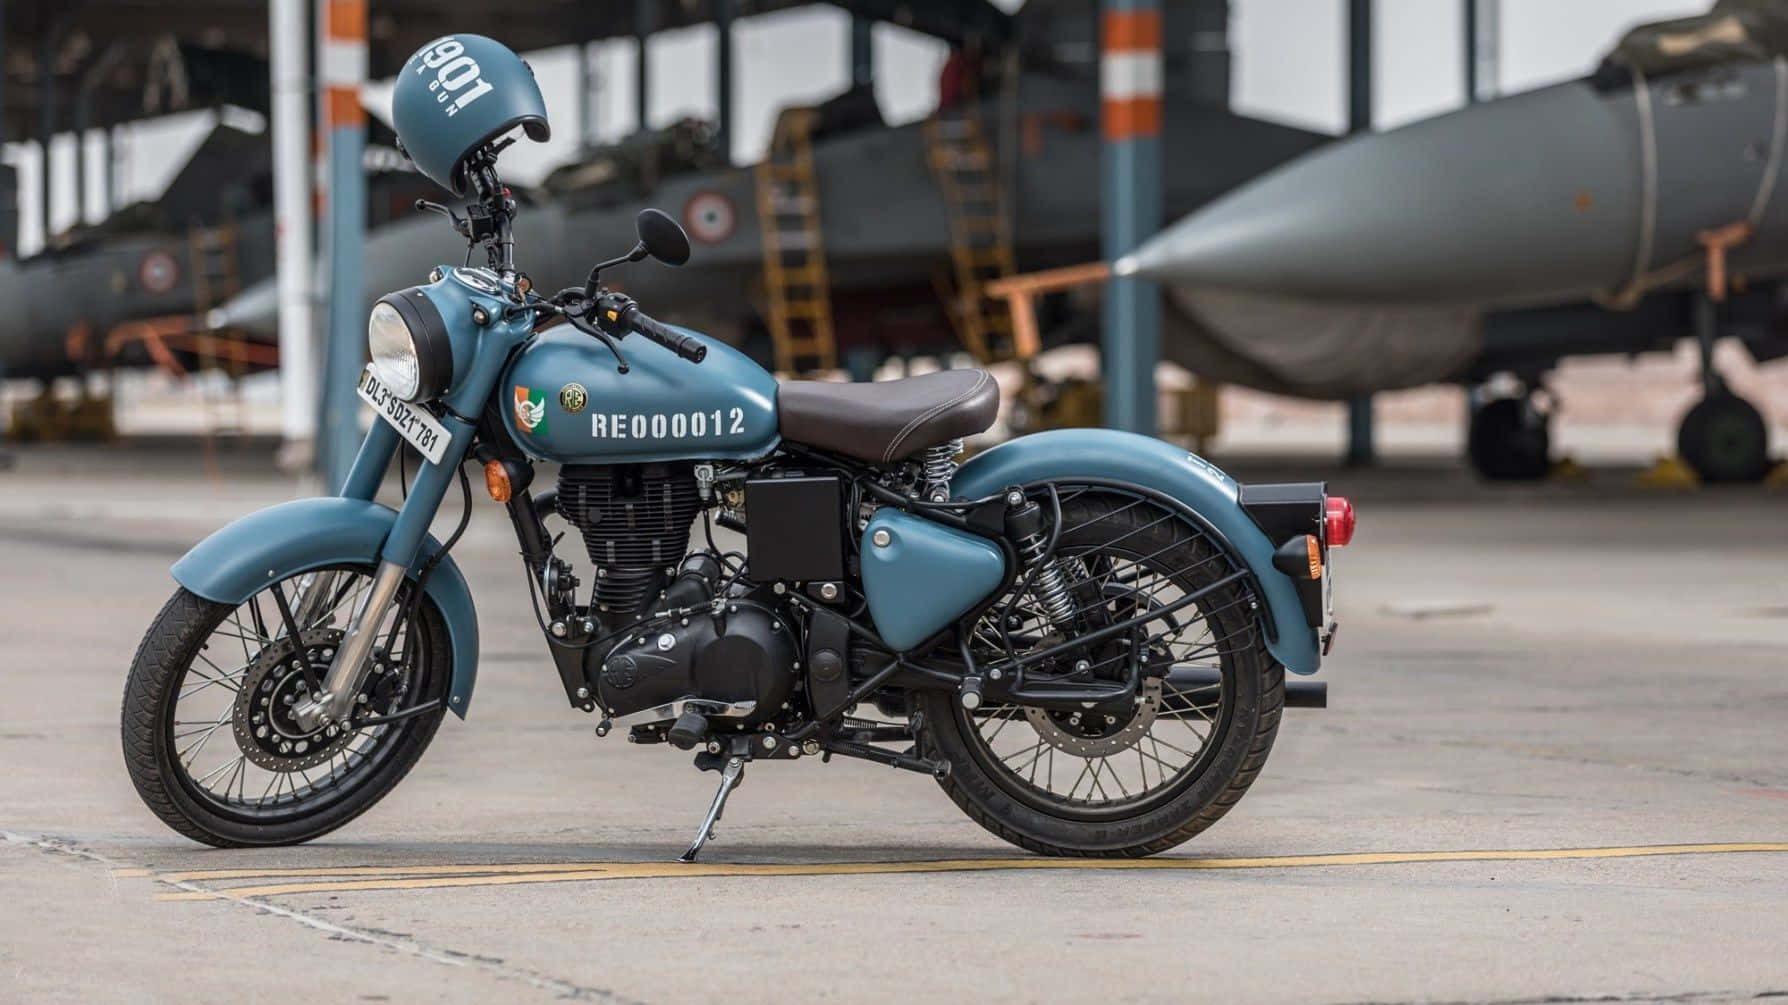 Vintage Motorcycle Airbase Backdrop Background